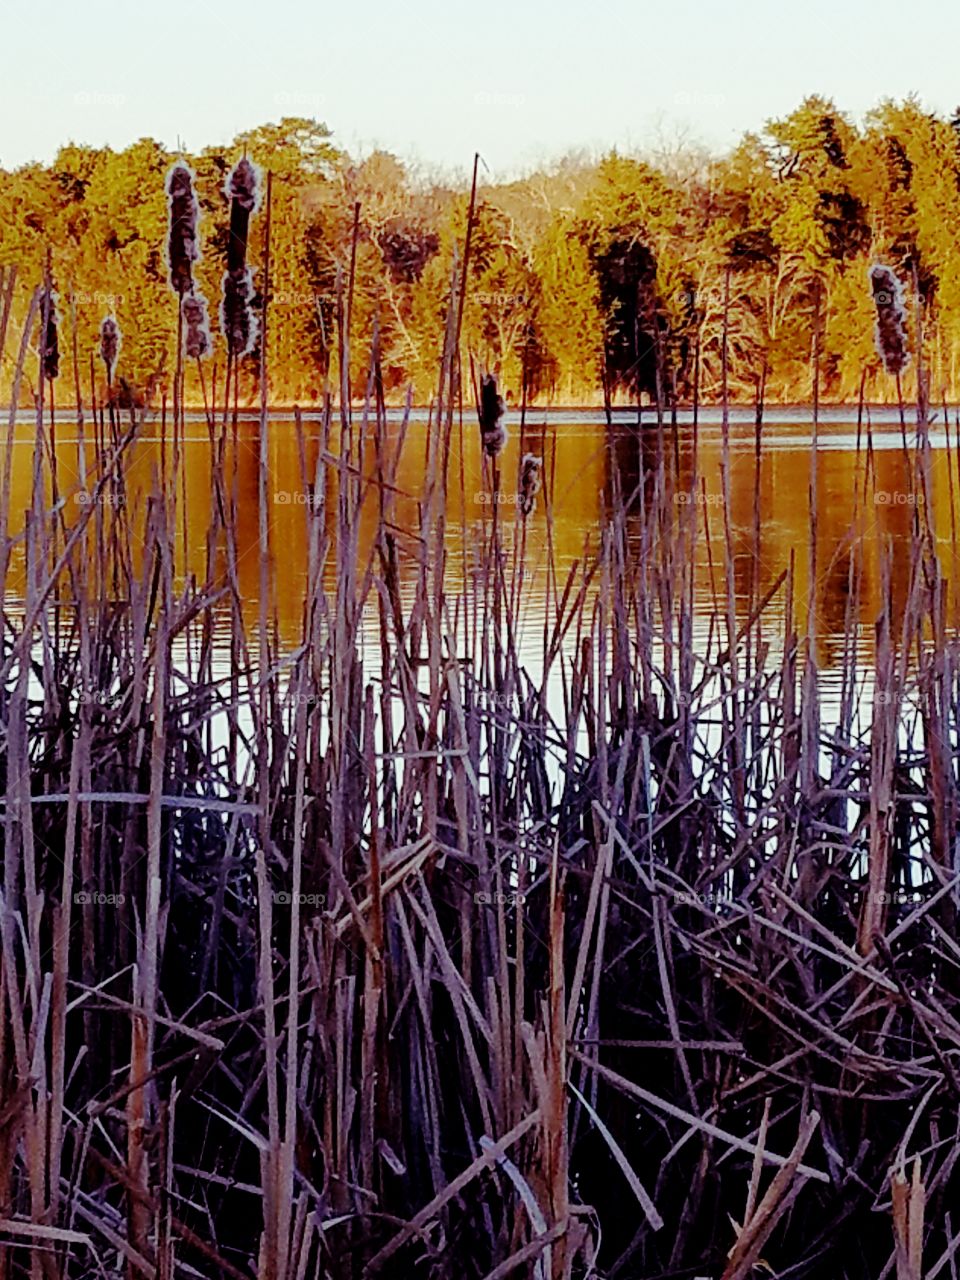 Marsh weeds by the lake at Scotland Run Park